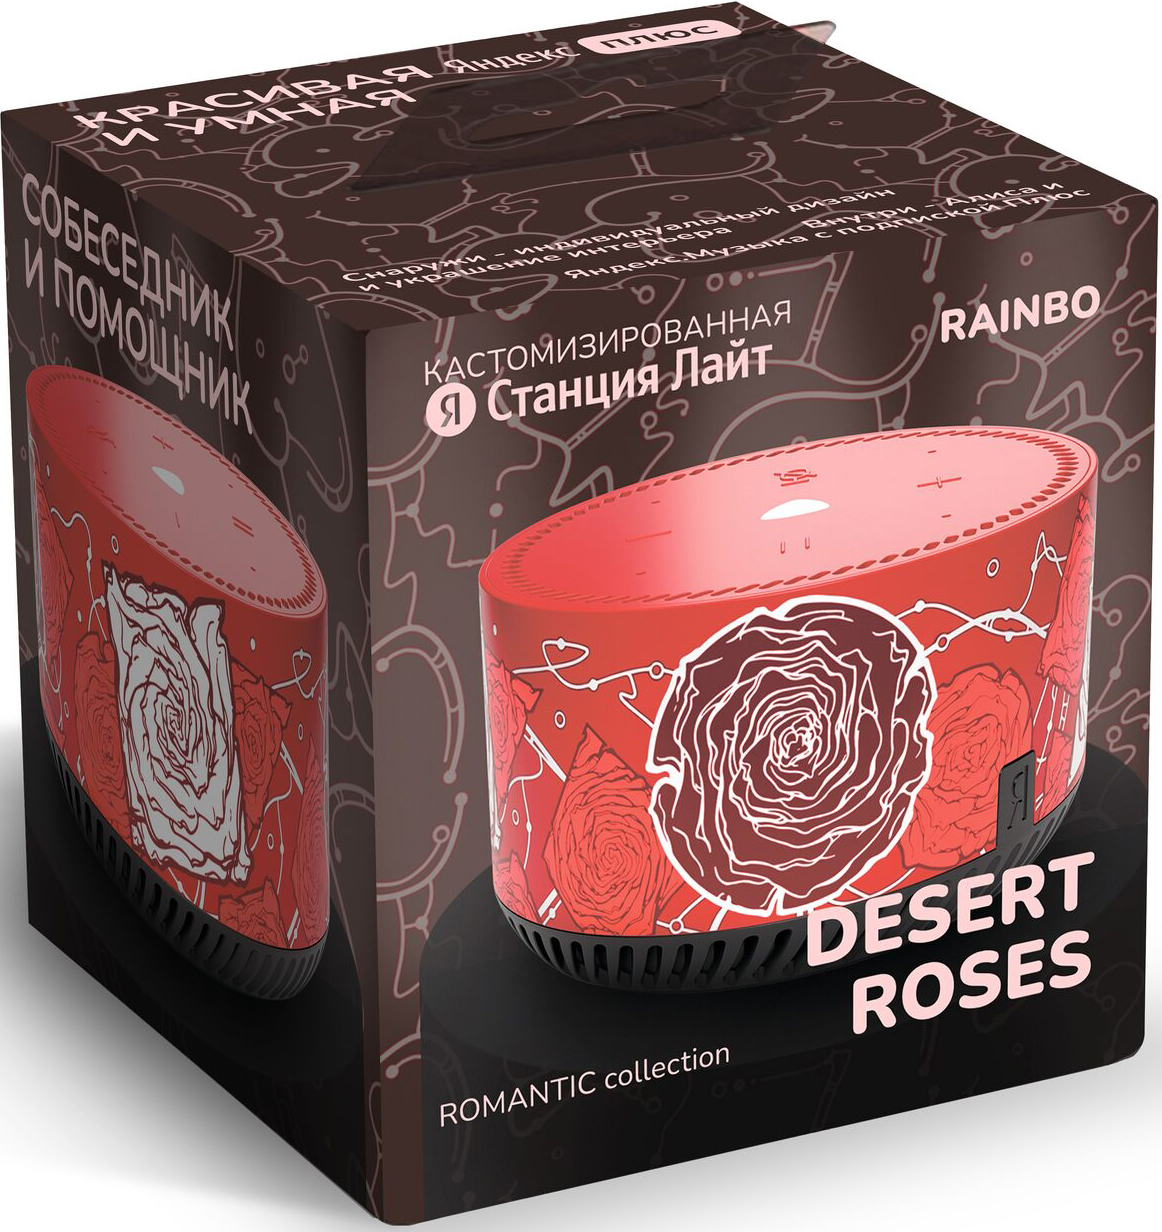 Кастомизированная Яндекс.Станция Лайт Rainbo: Desert Roses от 1С Интерес